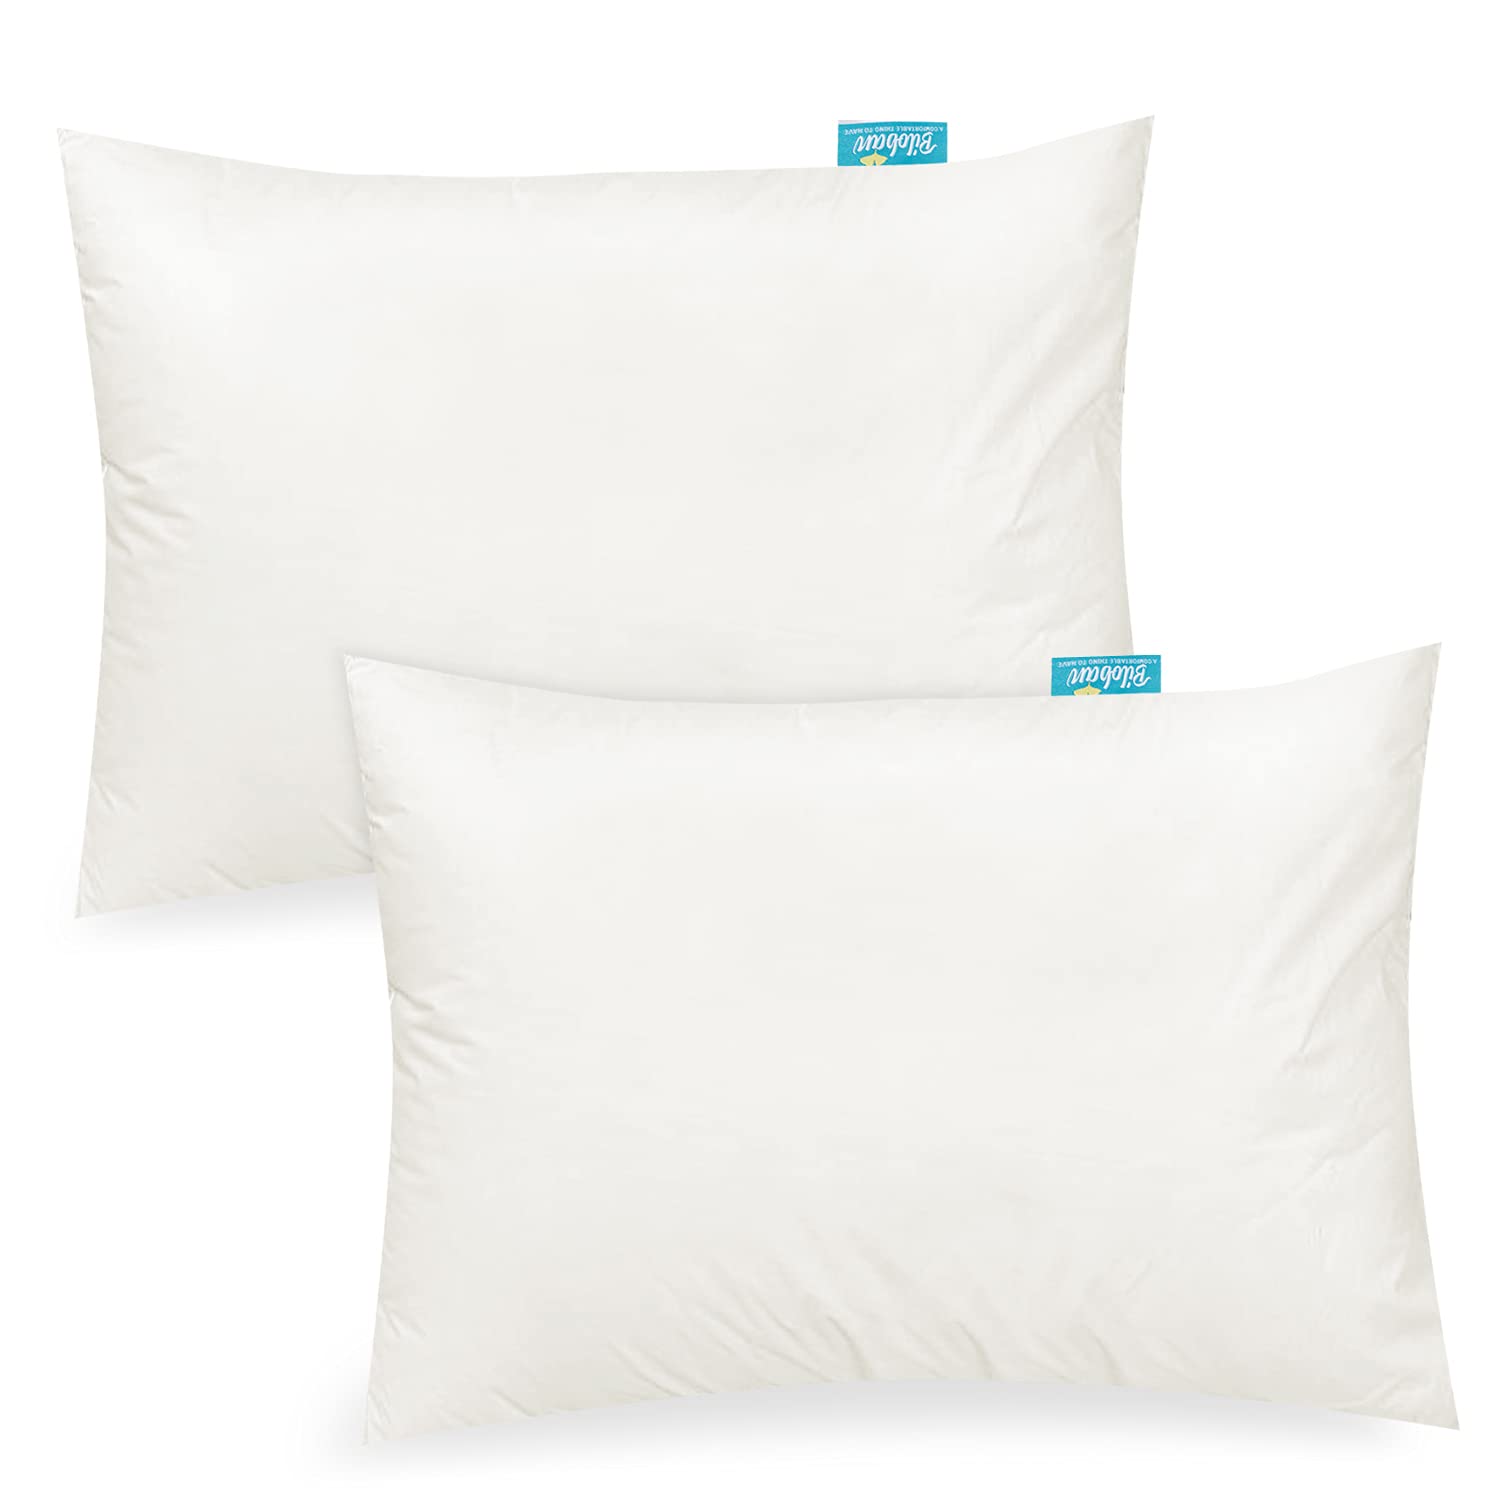 Toddler Pillowcase - 2 Pack, Ultra Soft 100% Jersey Cotton, Envelope Style, Cream - Biloban Online Store